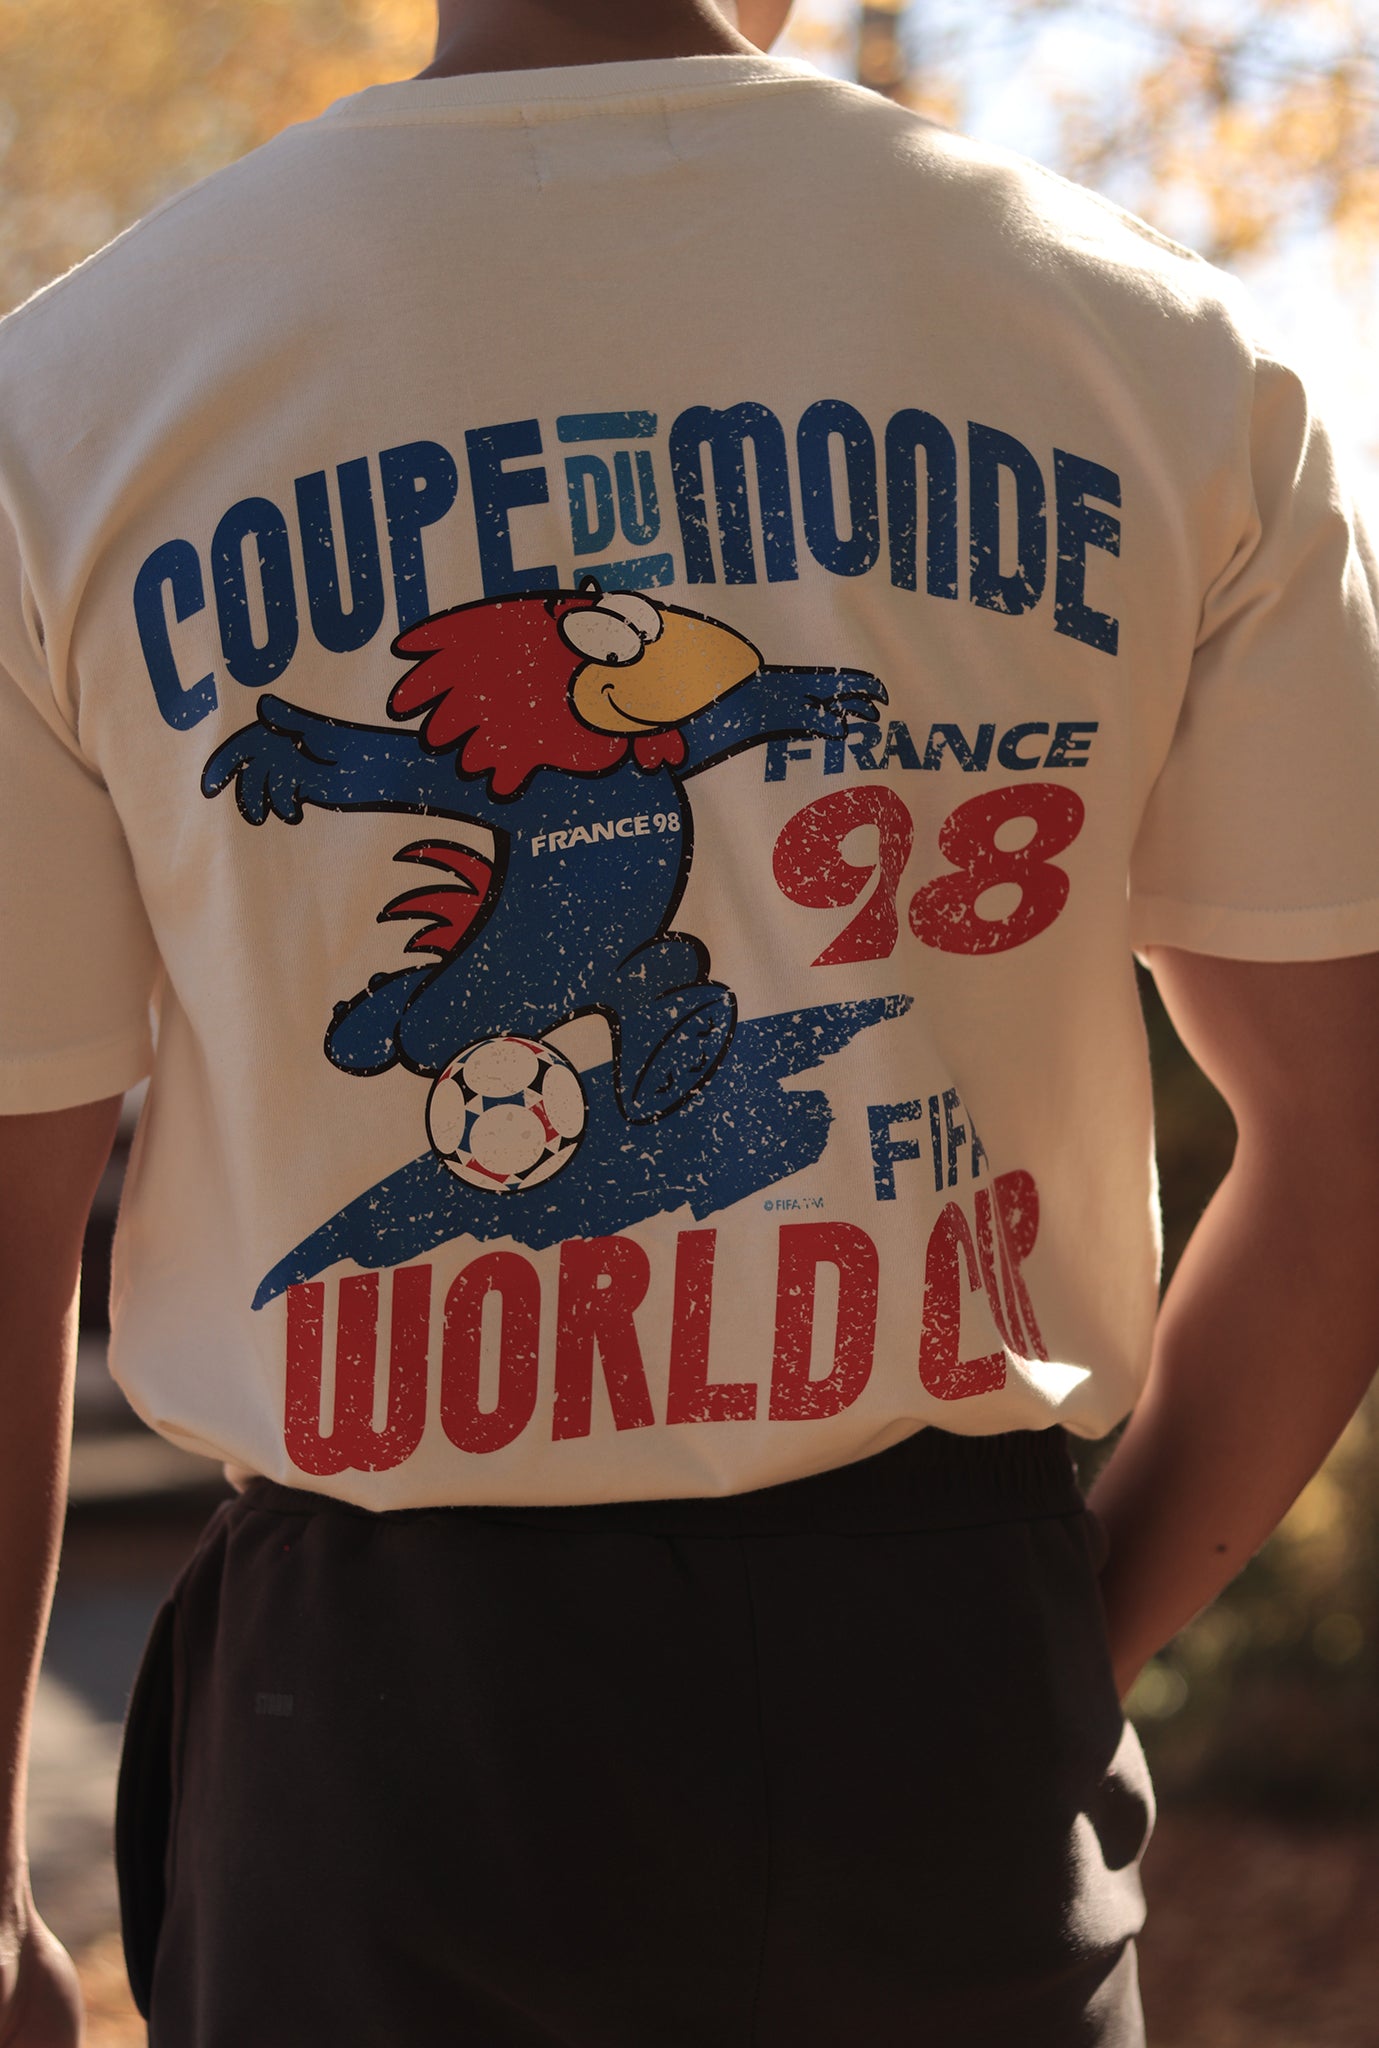 FIFA World Cup France 1998 Vintage Premium T-Shirt - Ivory